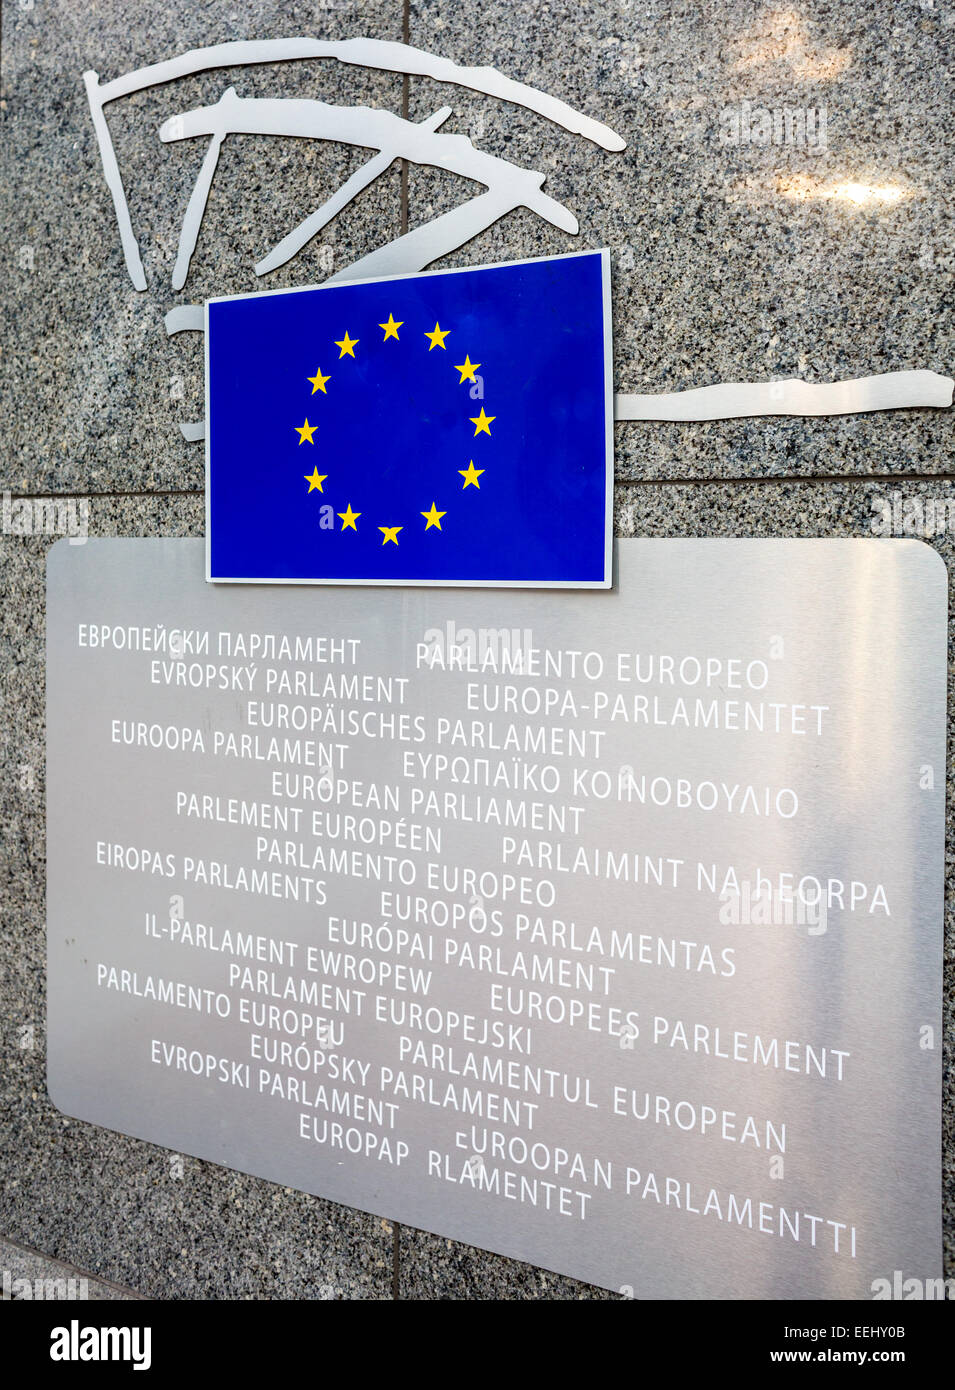 European Parliament entry sign Stock Photo